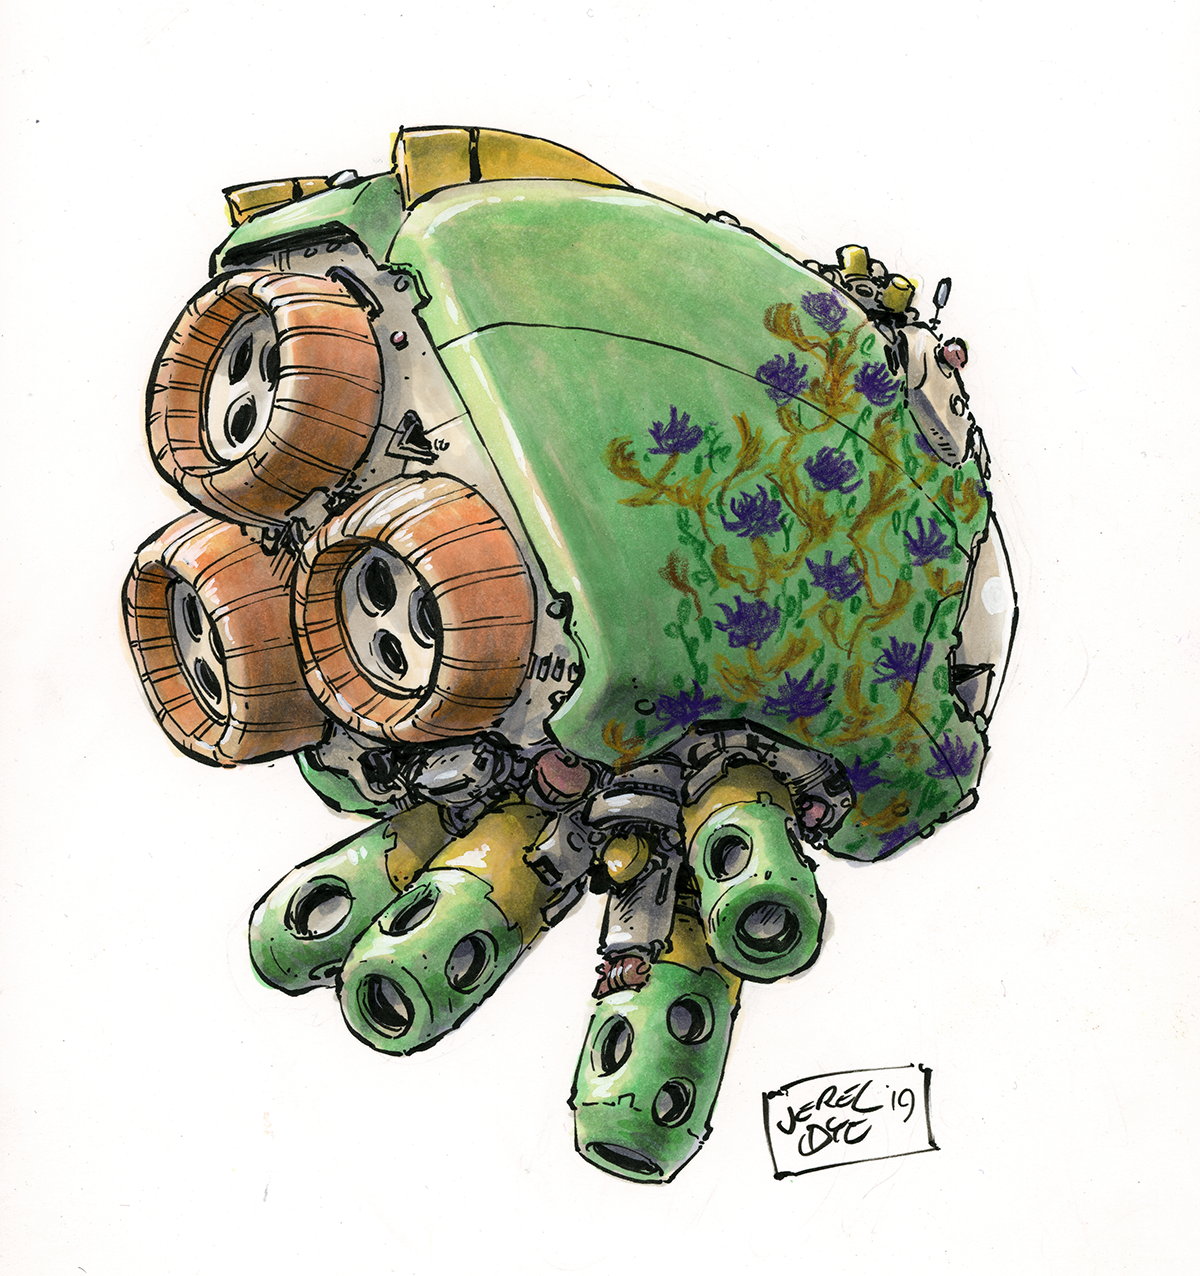 Drawing  Sciencefiction vehicledesign conceptart ComicsIllustration Cartooning  hardsurfacedesign Scifi spaceships